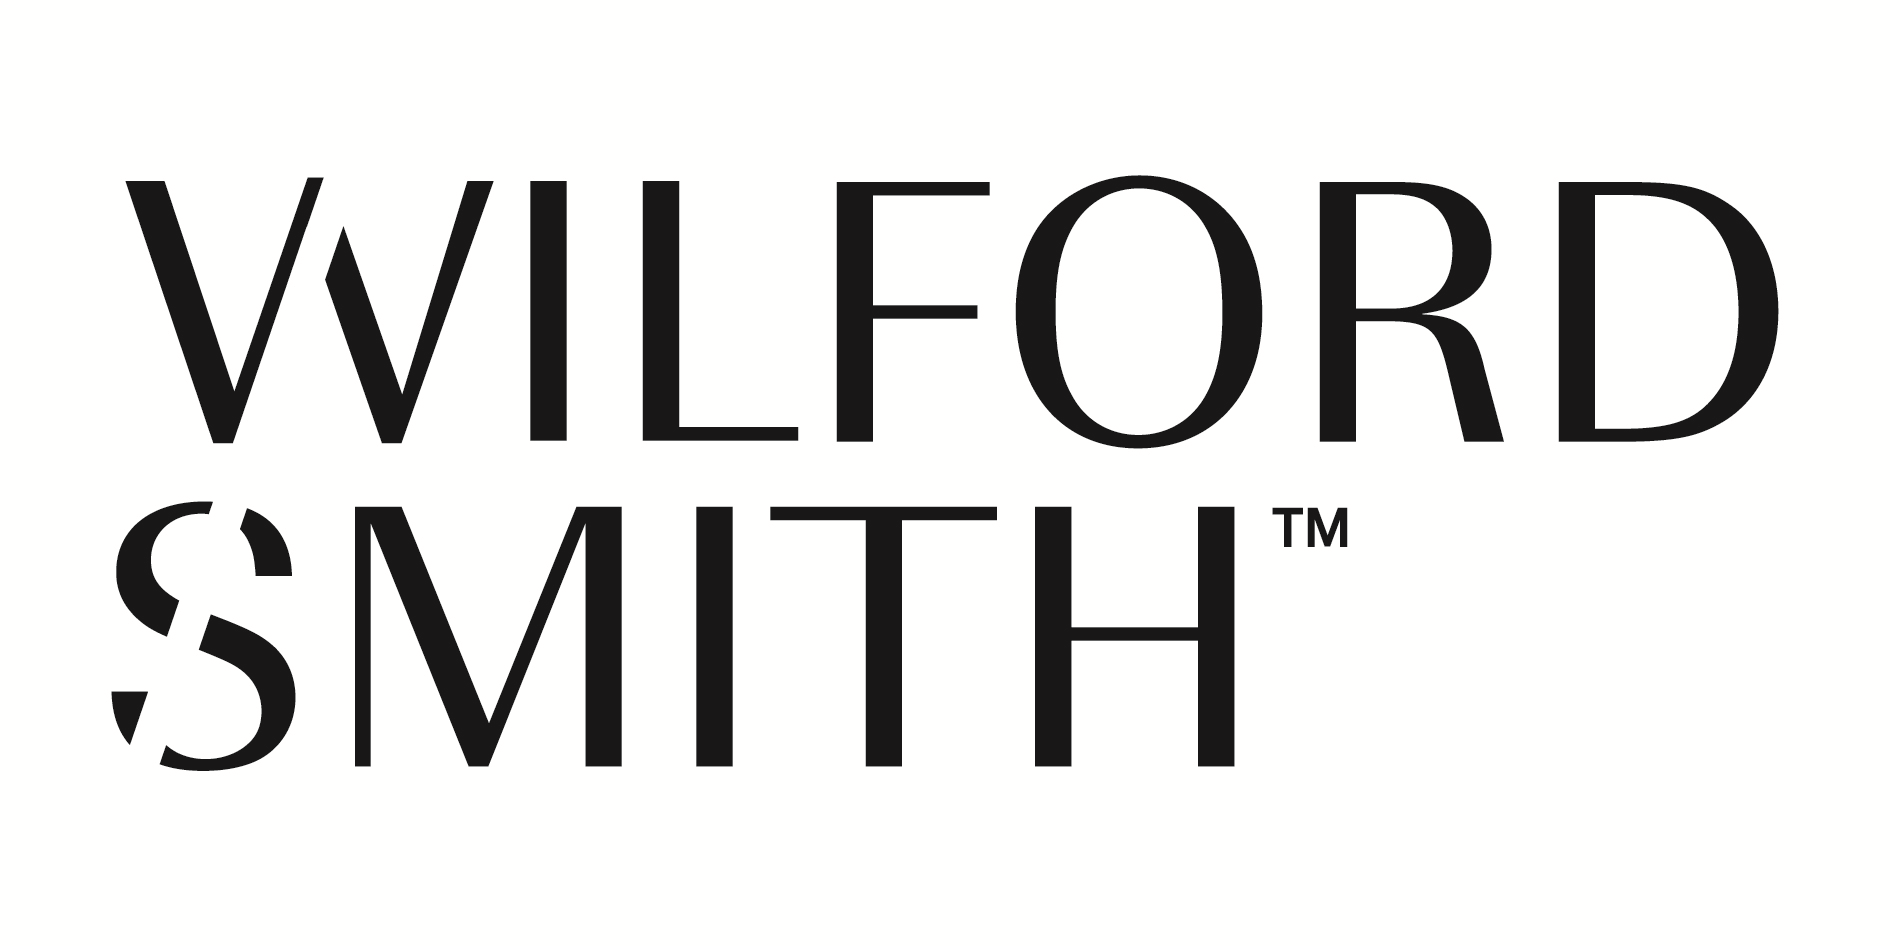 Wilford-Smith